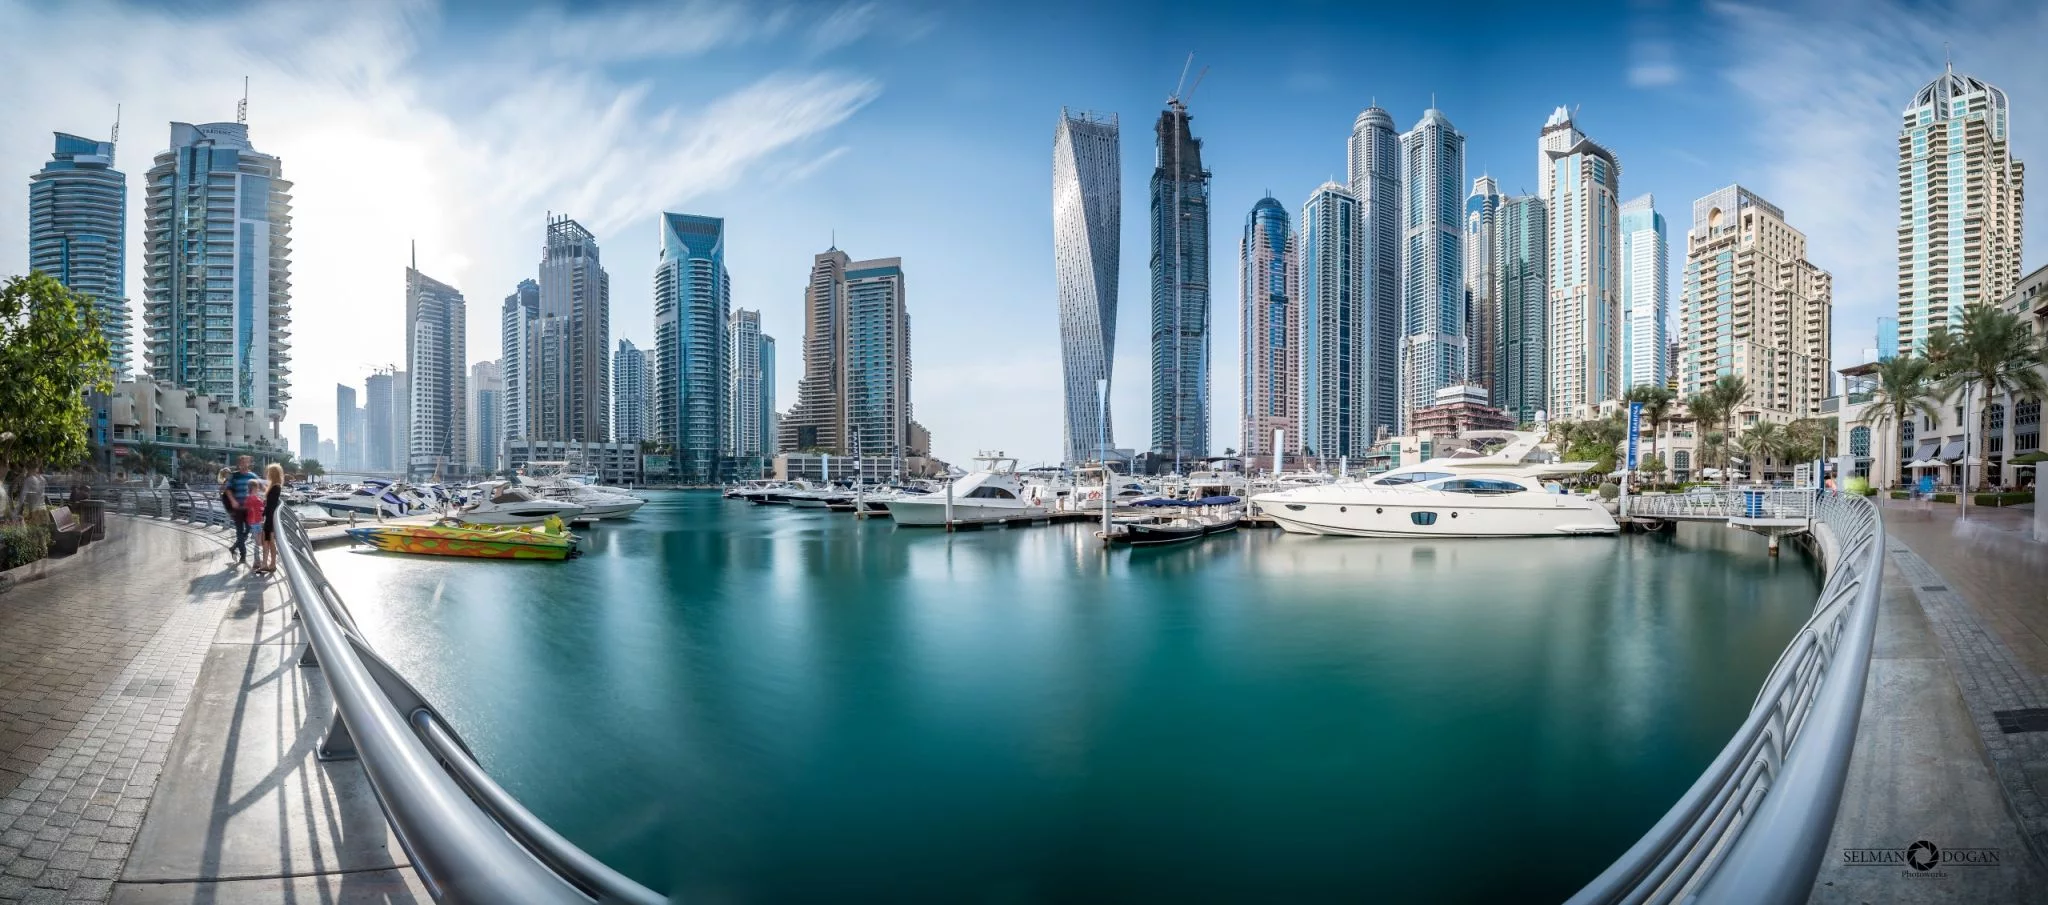 Dubai Marina - Panorama, United Arab Emirates